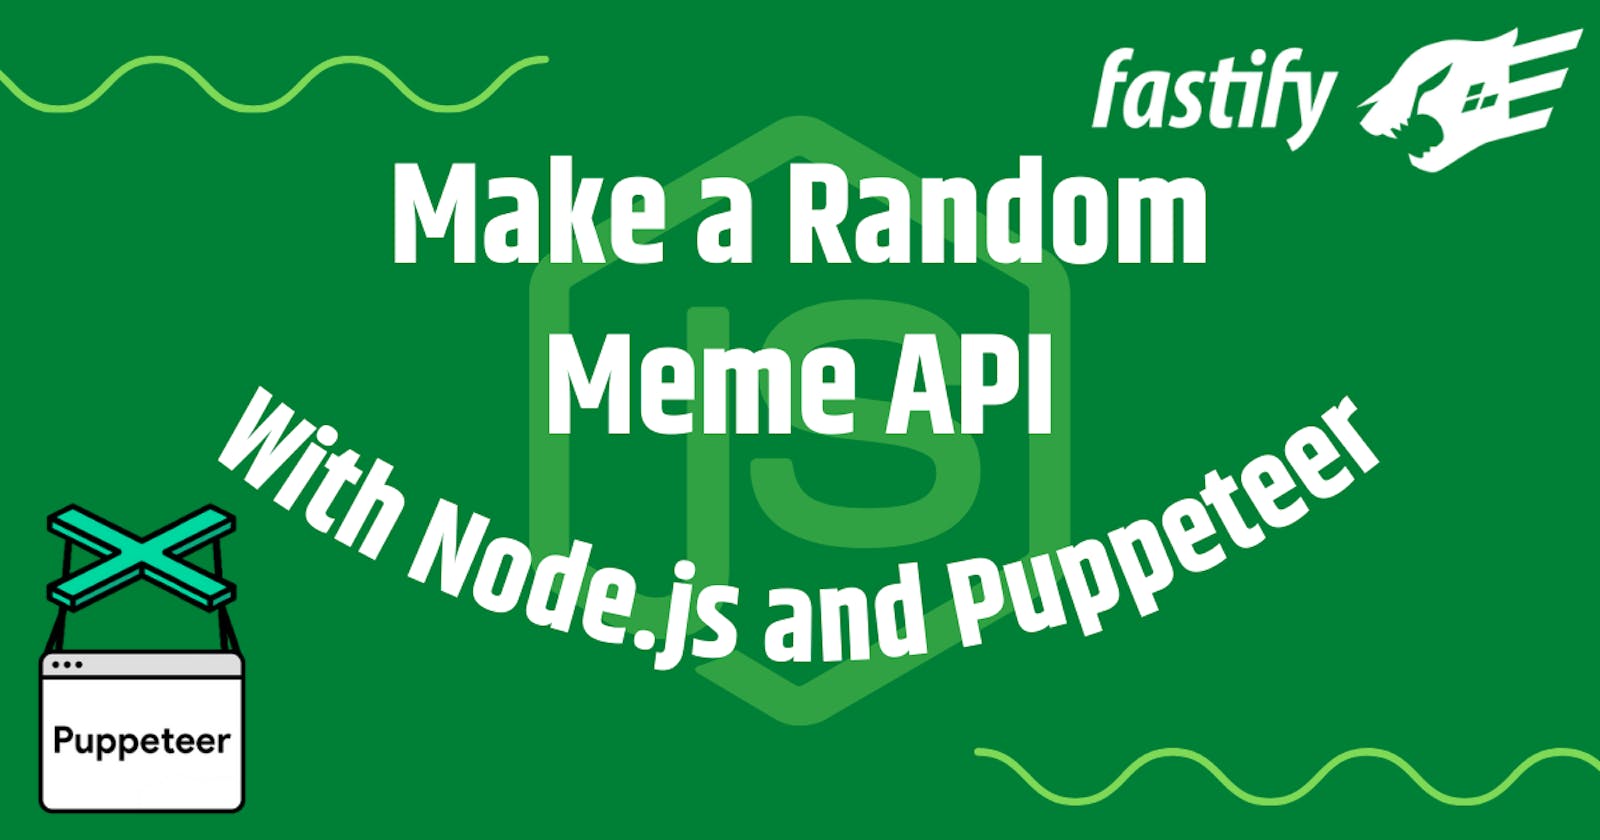 😱 Make a Random Meme API With Node.js and Puppeteer